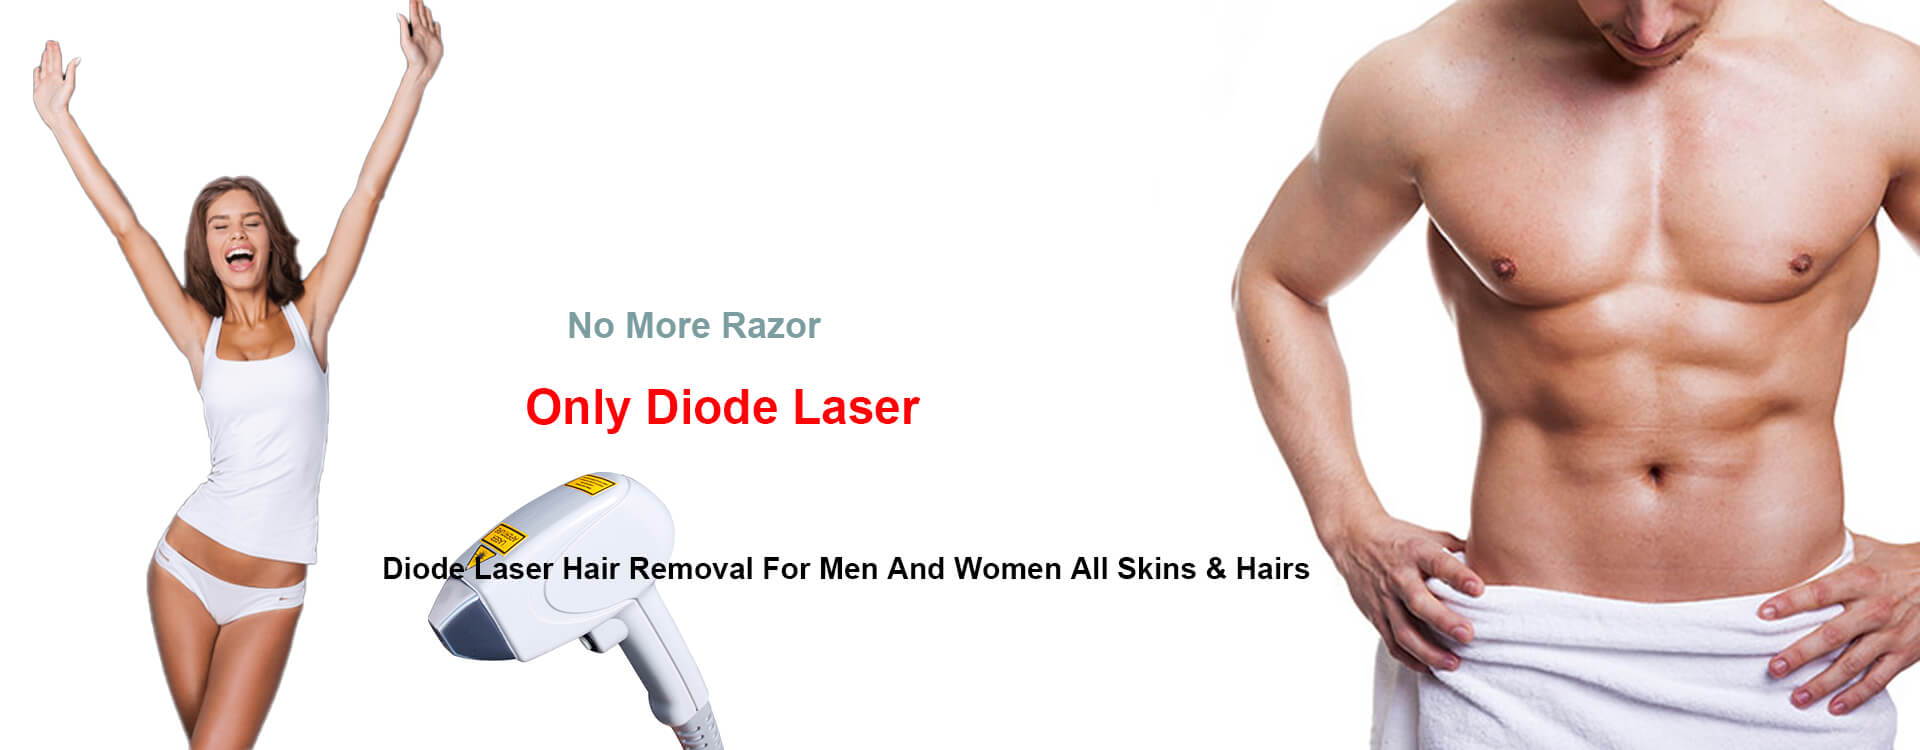 Both men and ladies can enjoy facial permanent hair removal.